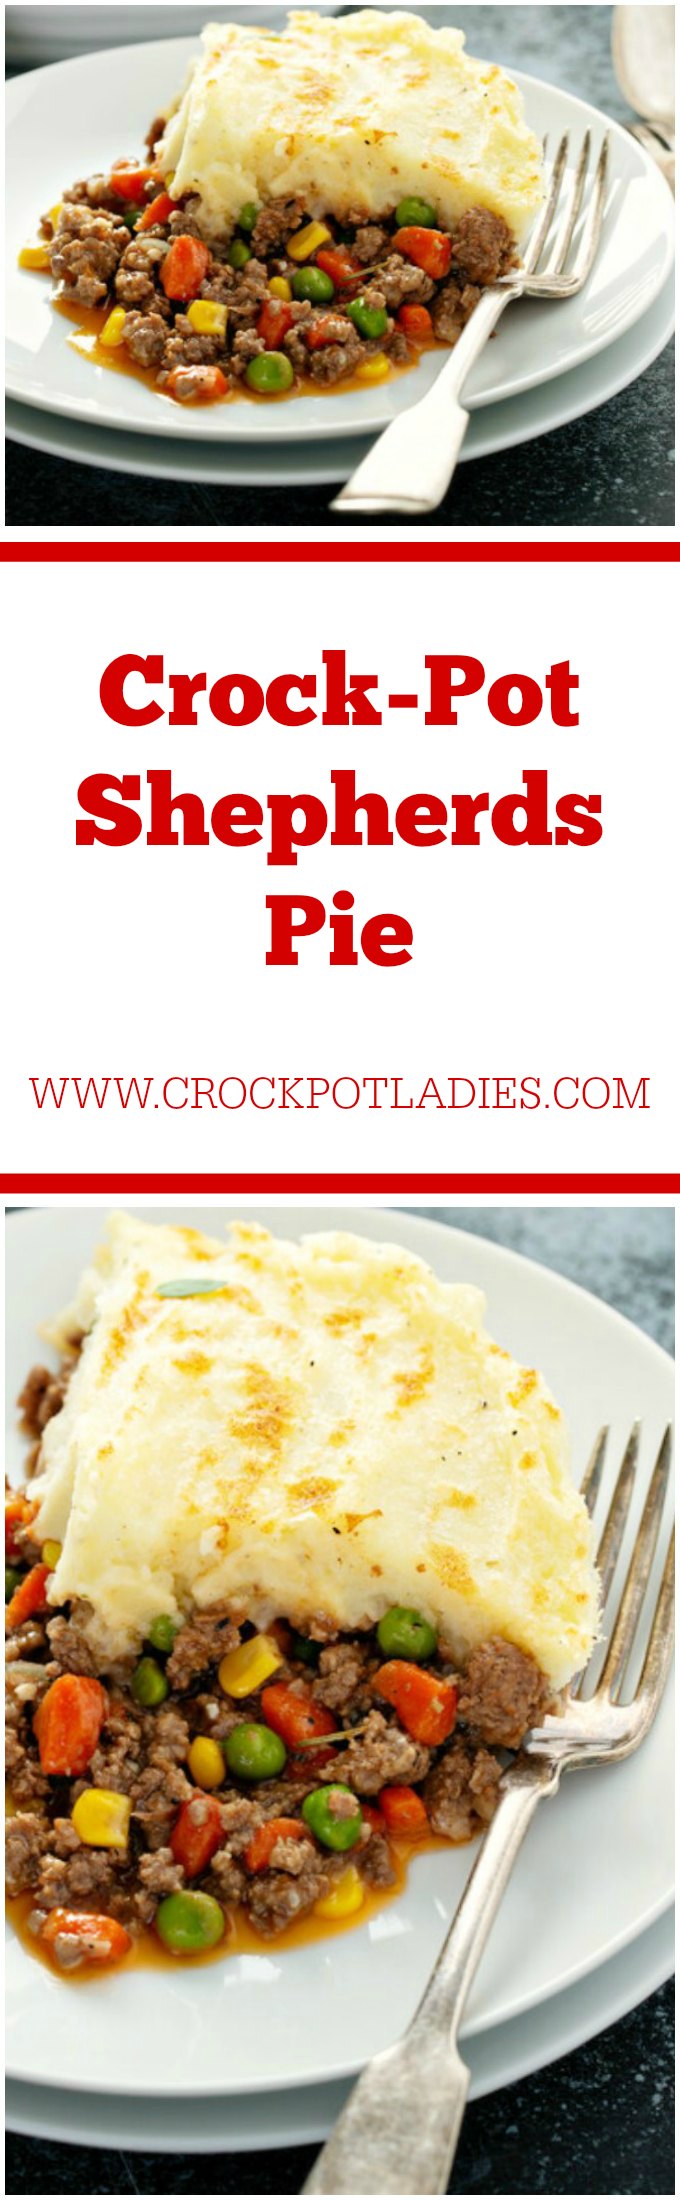 Crock-Pot Shepherds Pie